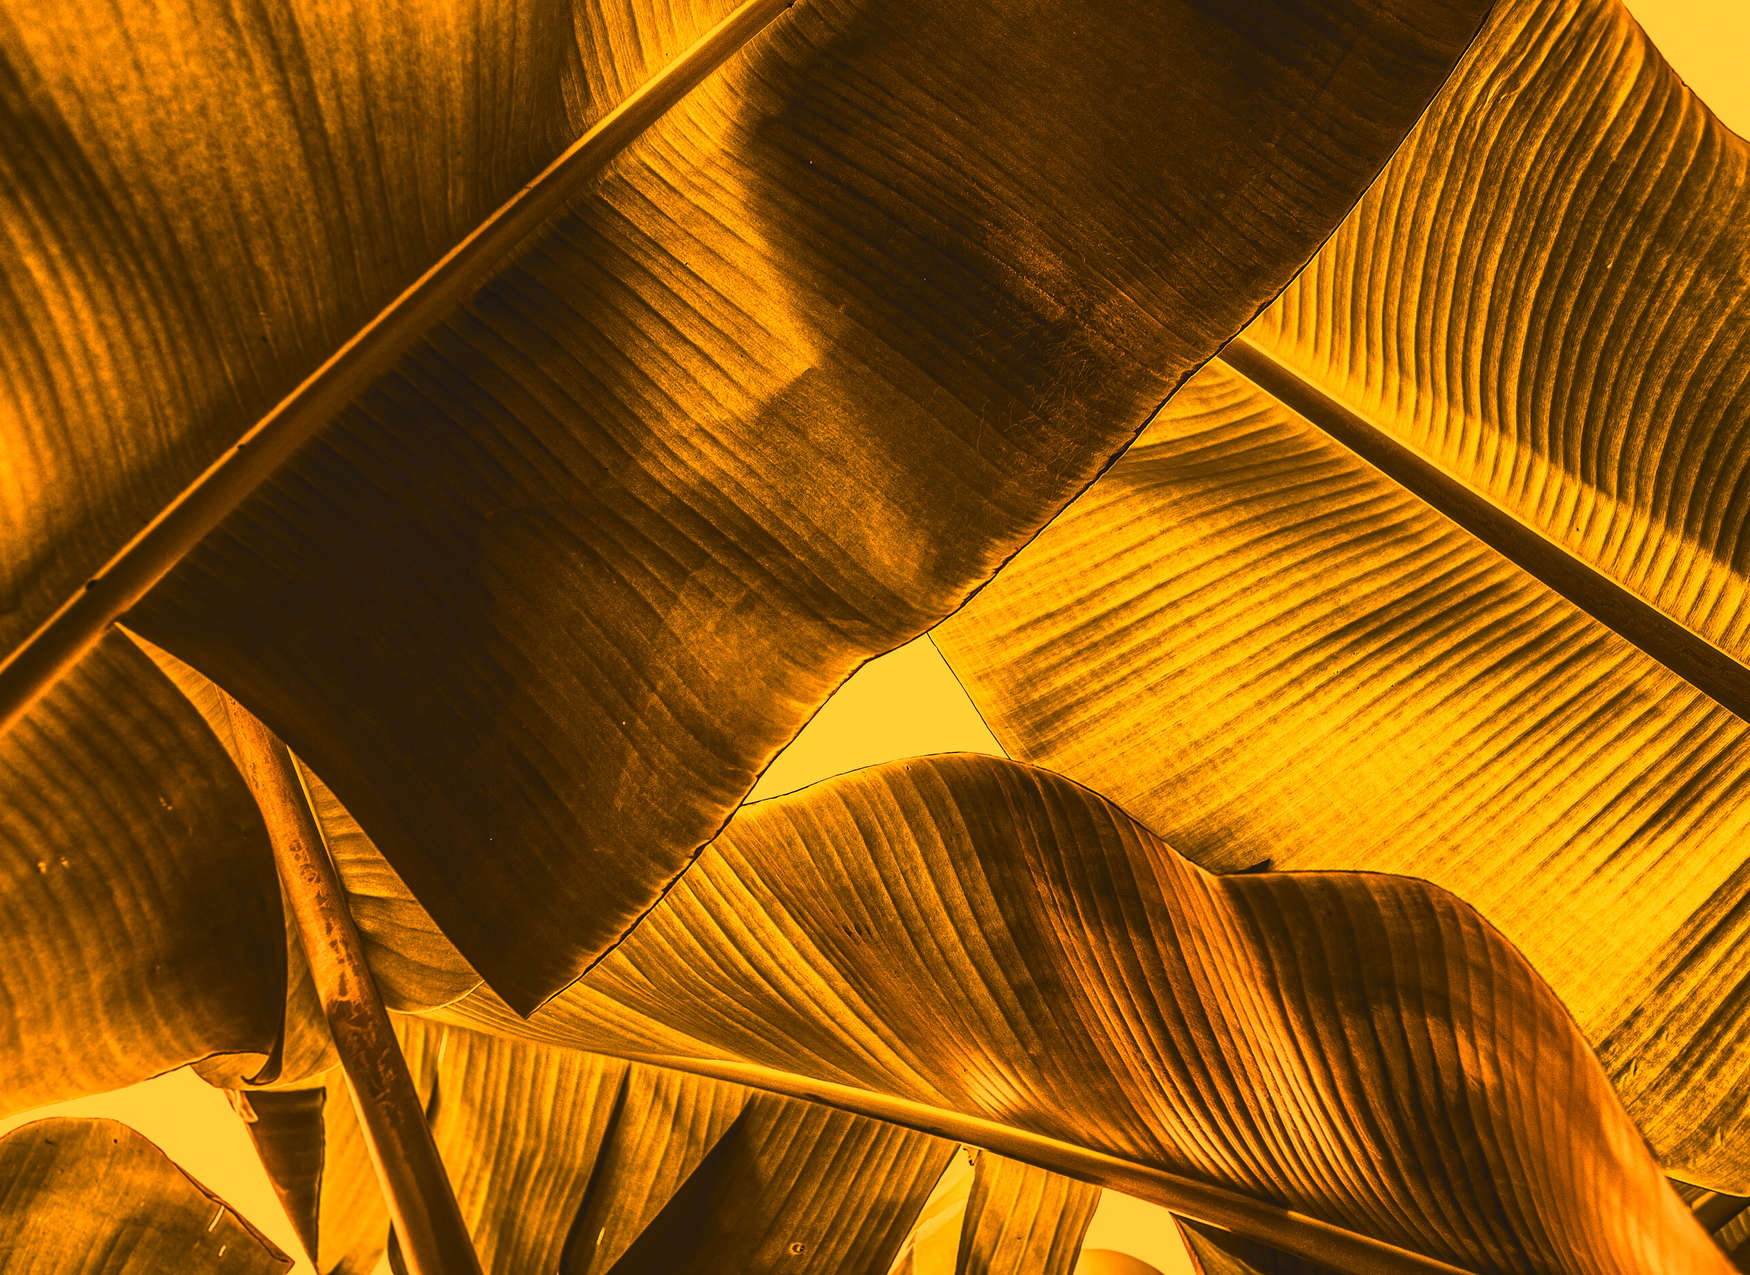             Tropical Leaves Detail Picture Motif - Oranje, Geel
        